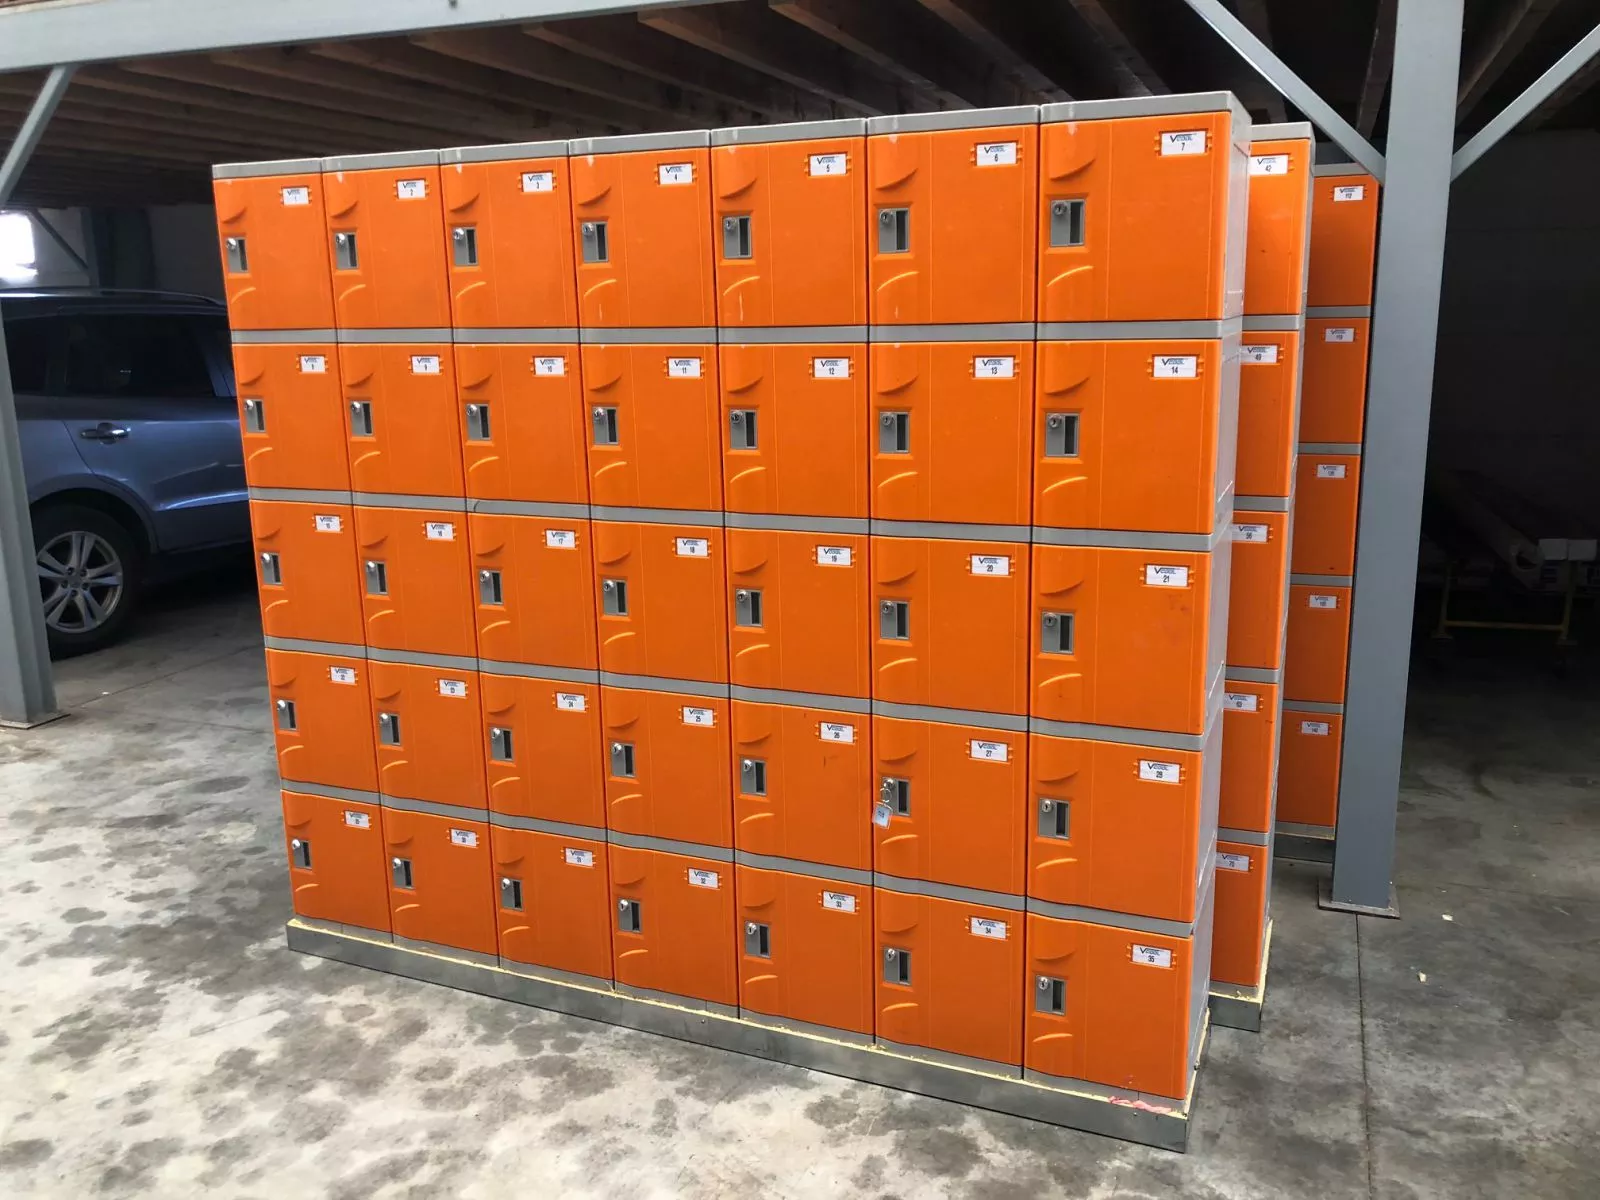 abs-plastic-locker-t-320f-42-for-schools-flexible-configurations-parking-space-orange.jpg